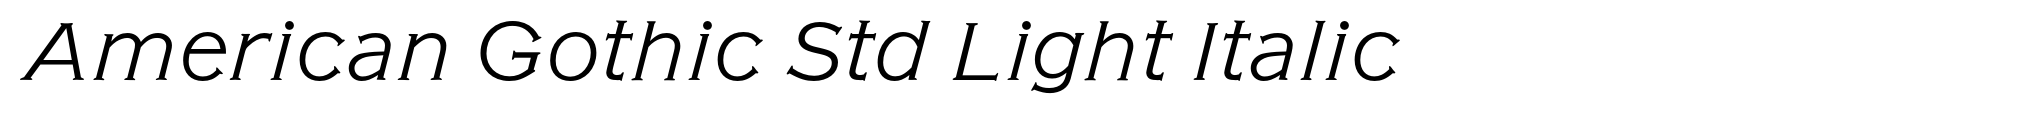 American Gothic Std Light Italic image